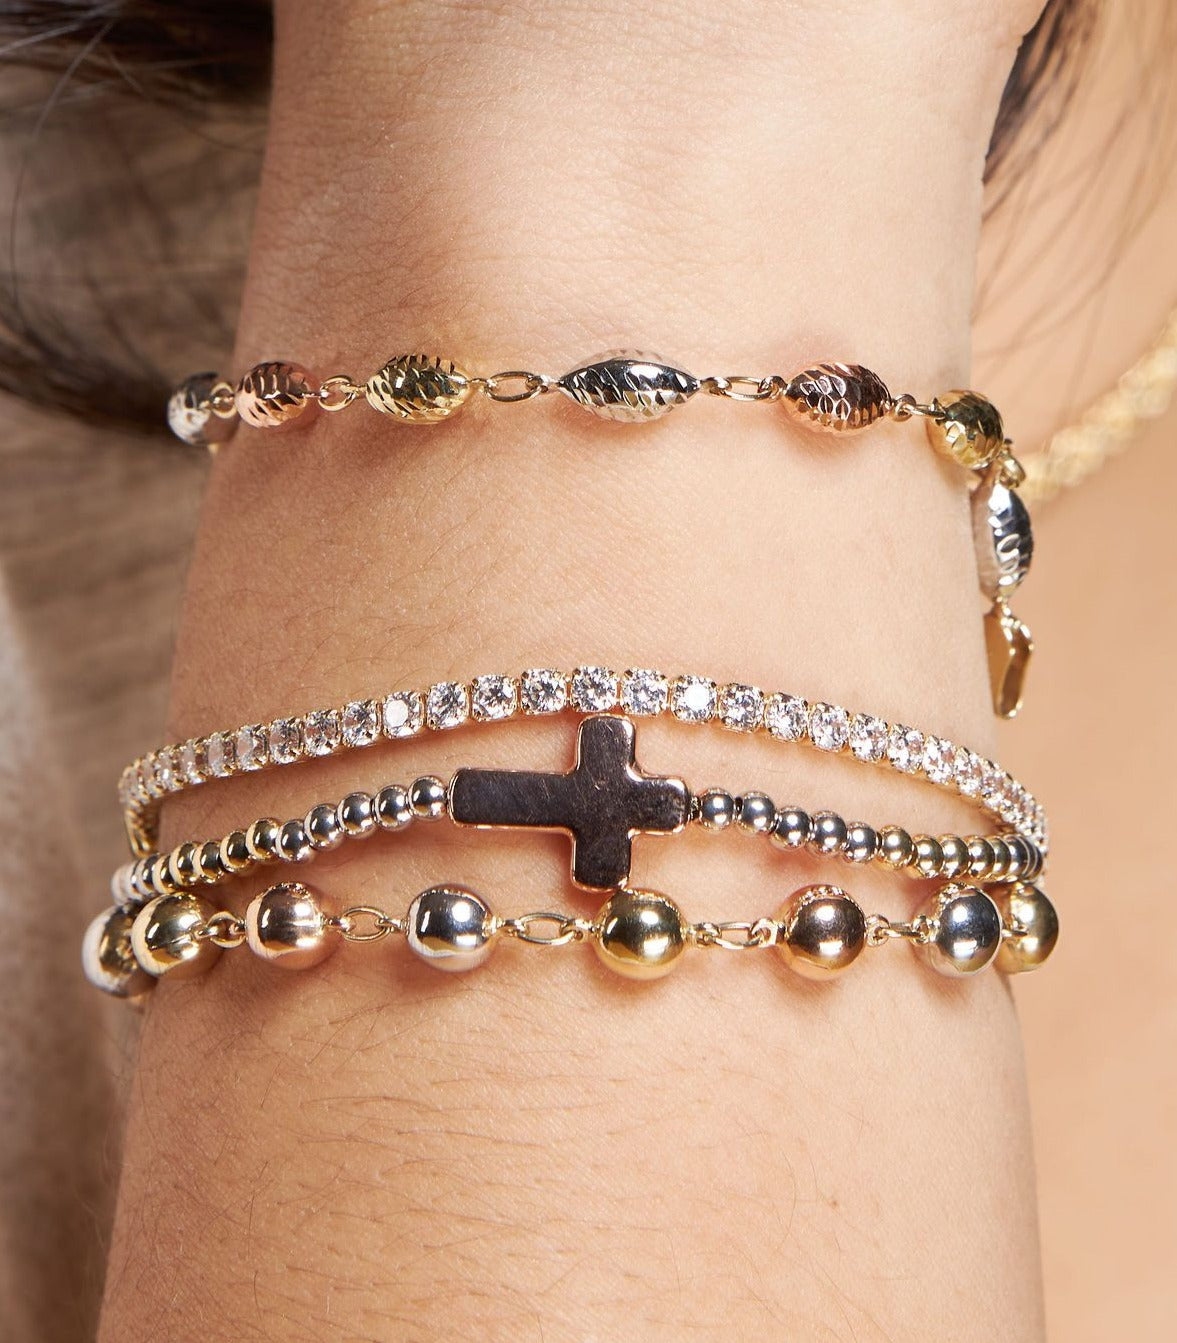 Gold & Crystal Beads Decade Rosary Bracelet | Lourdes Giftshop